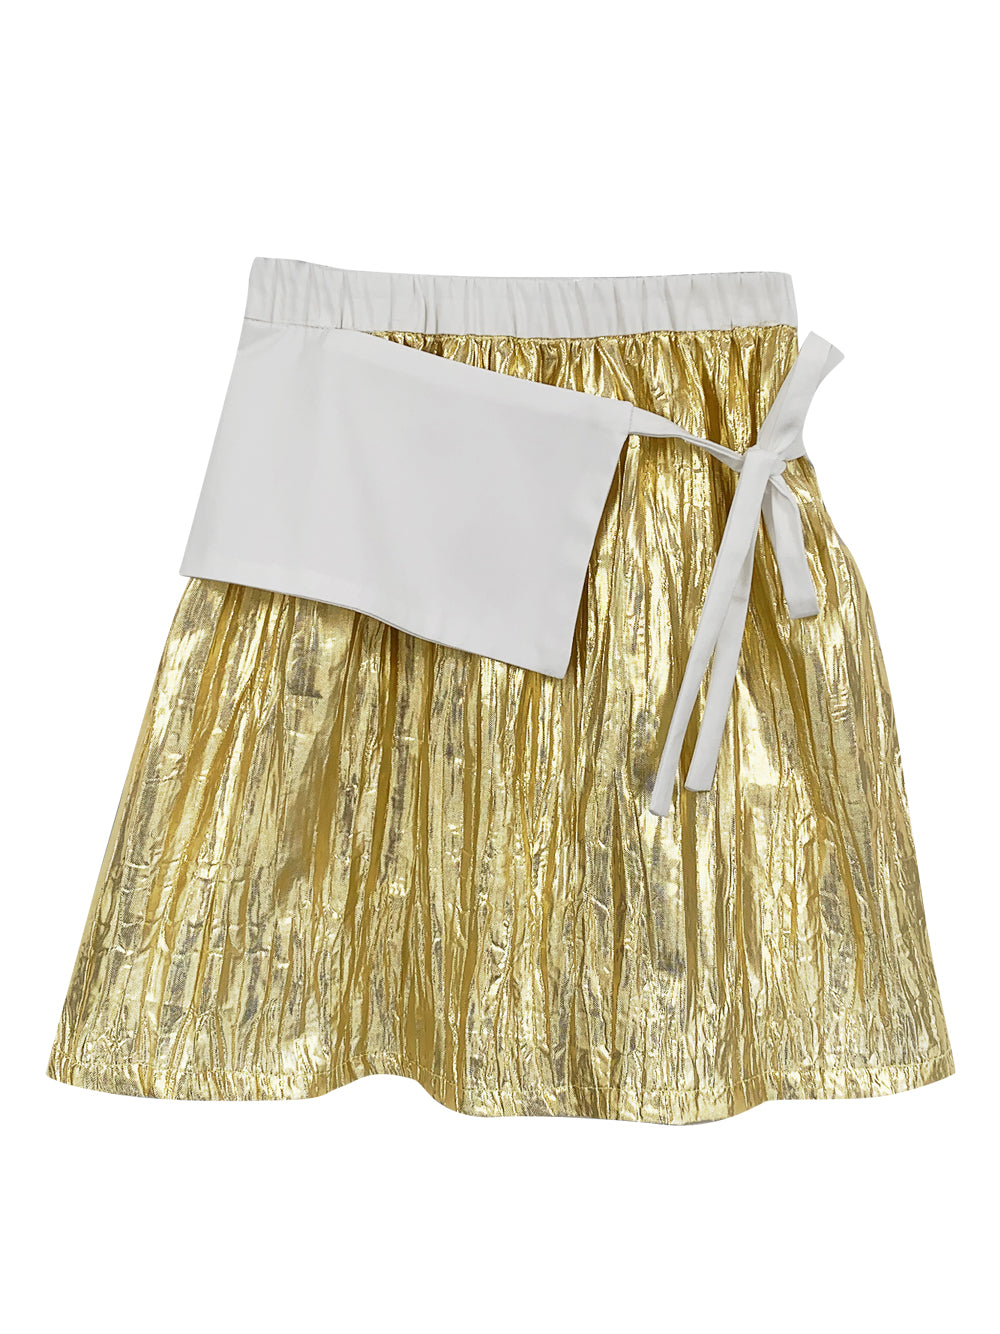 Tori Gold Skirt